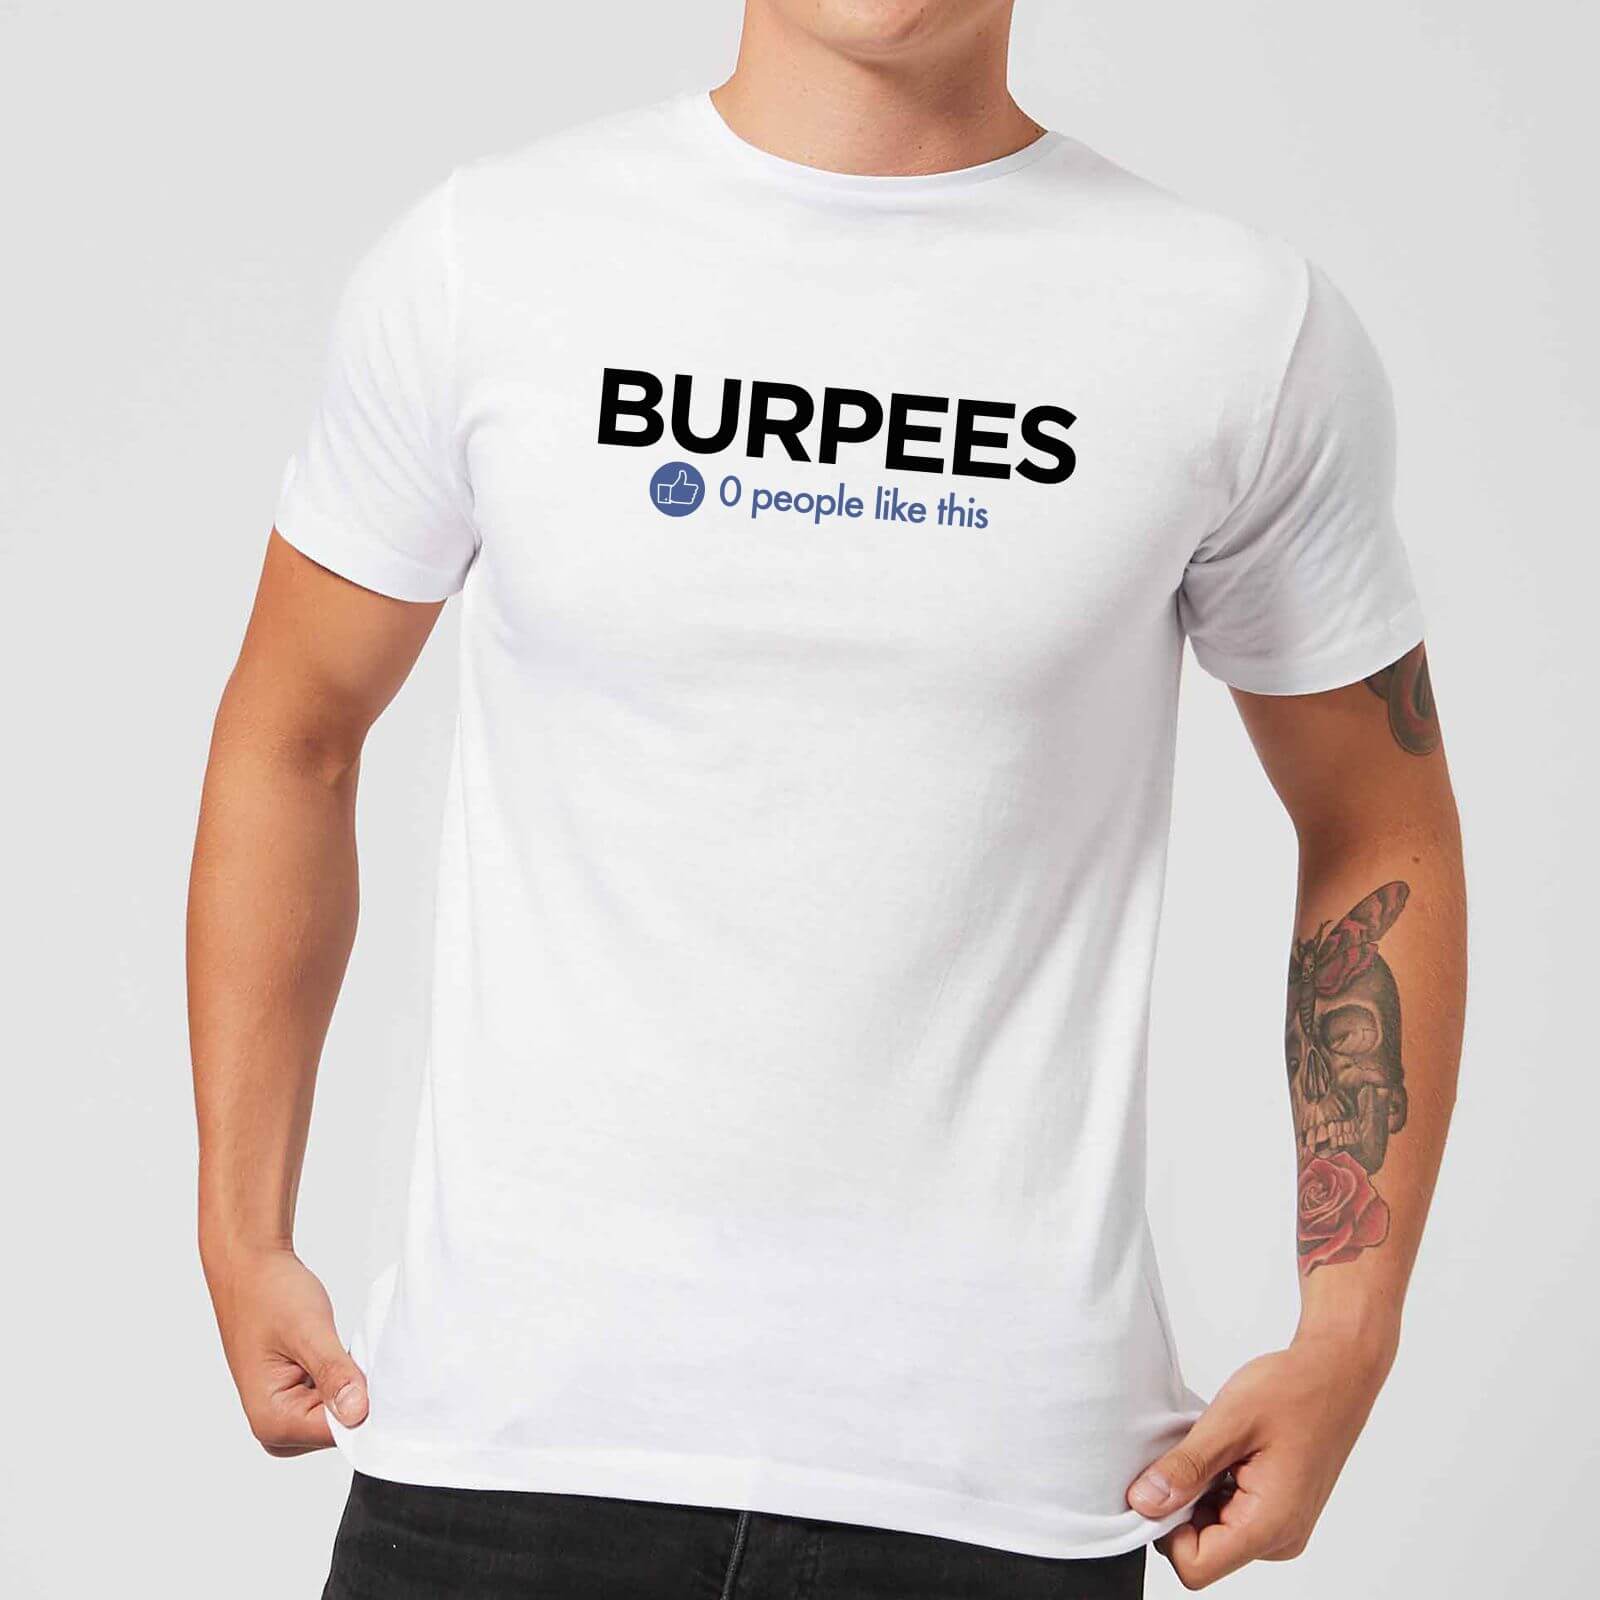 Nobody Likes Burpees T-Shirt - White - M - White